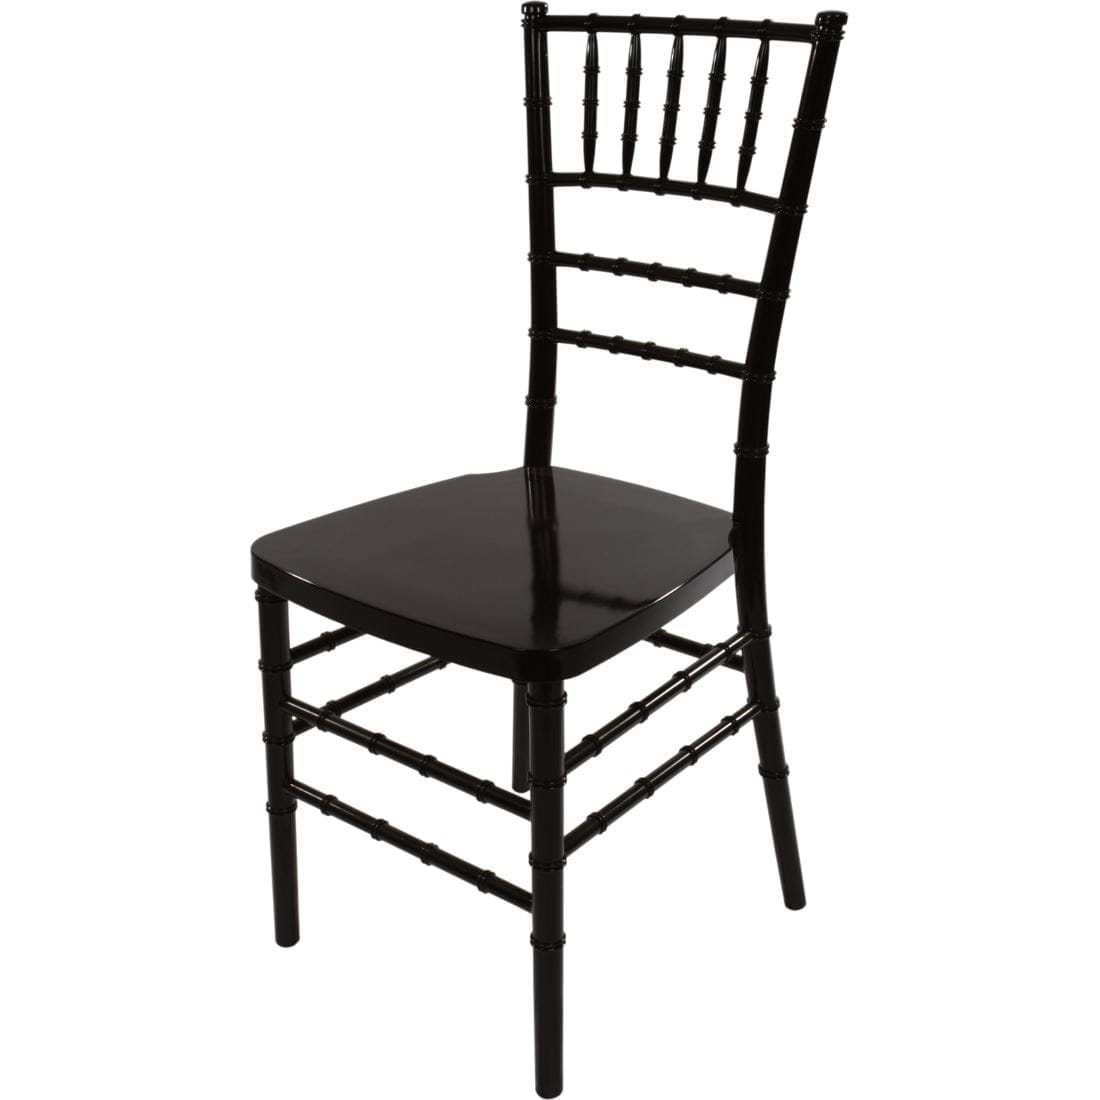 Black resin chiavari chair